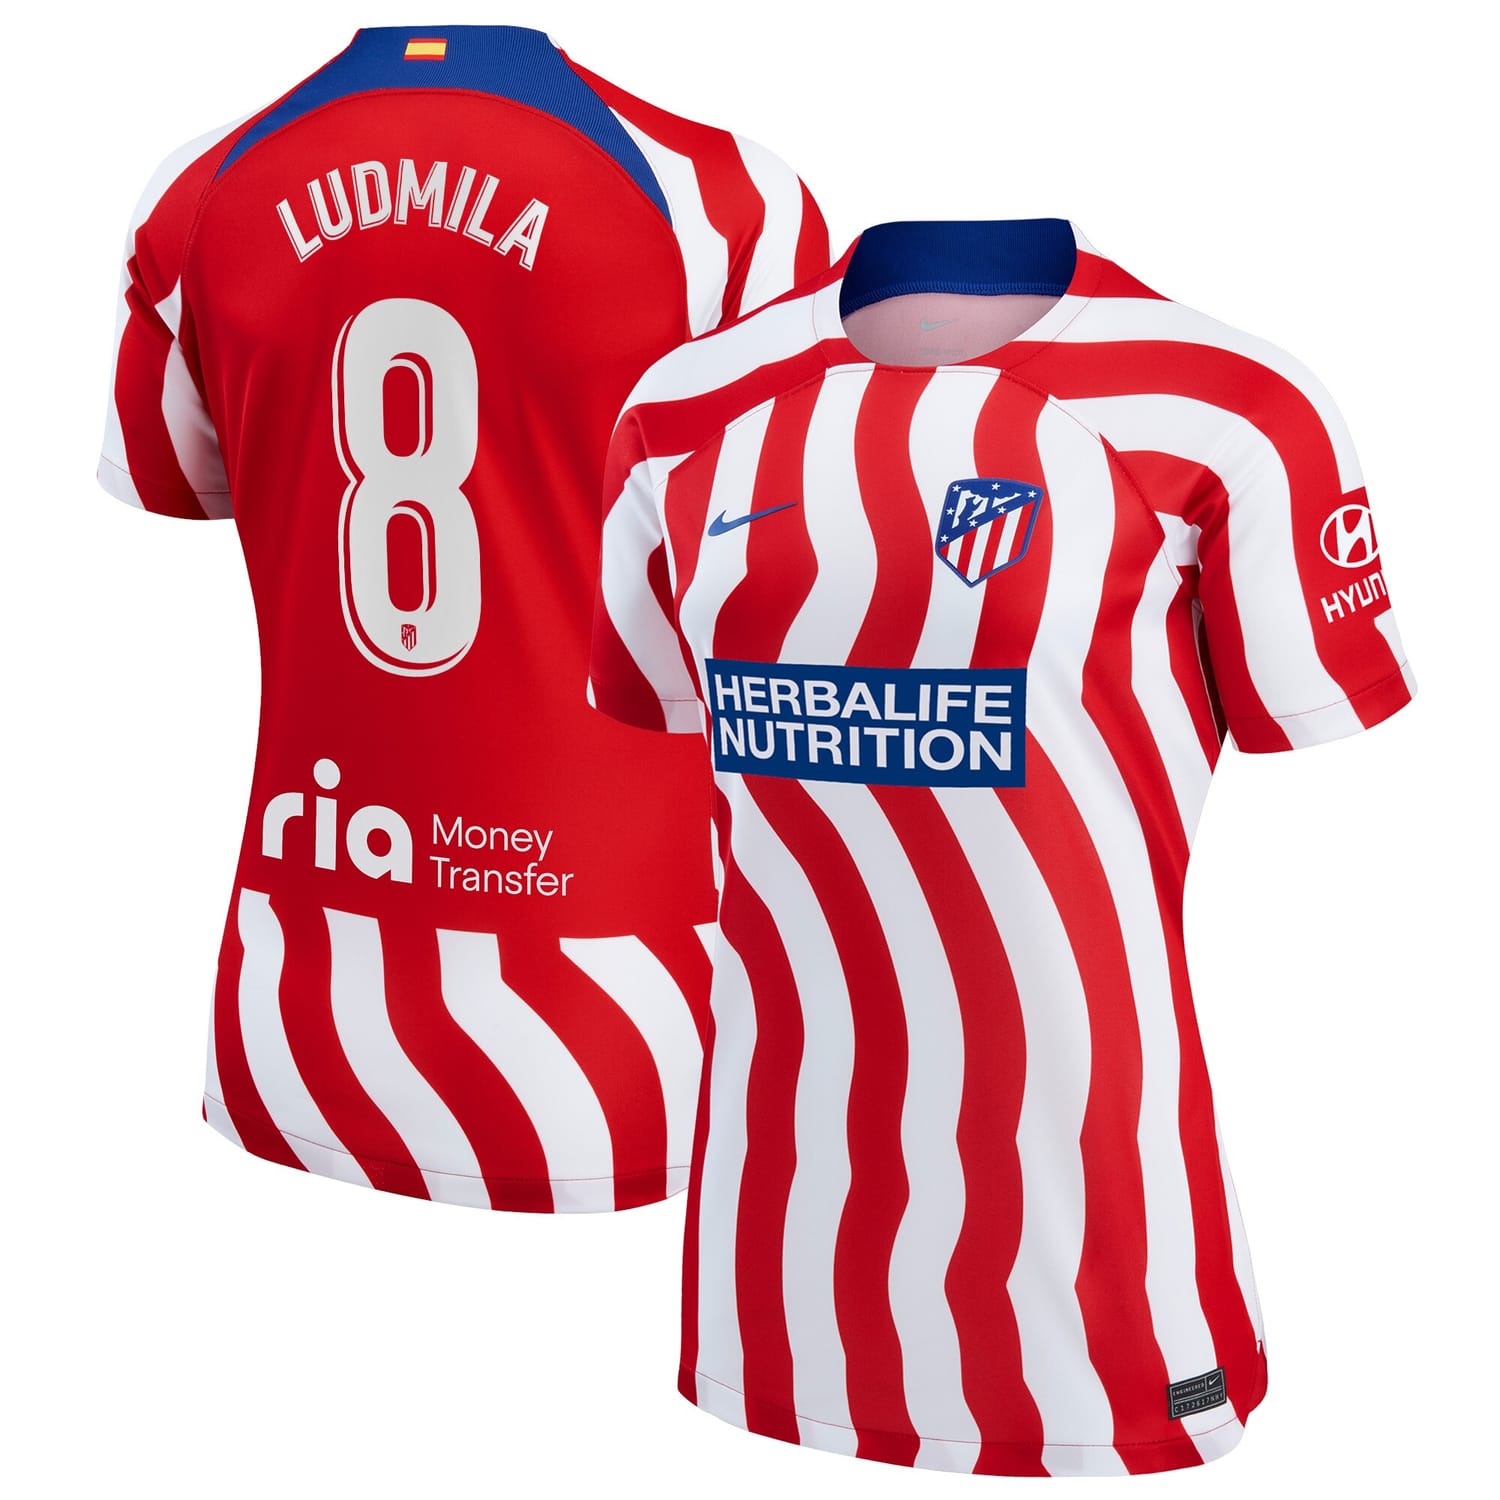 La Liga Atletico de Madrid Home Jersey Shirt 2022-23 player Ludmila da Silva 8 printing for Women